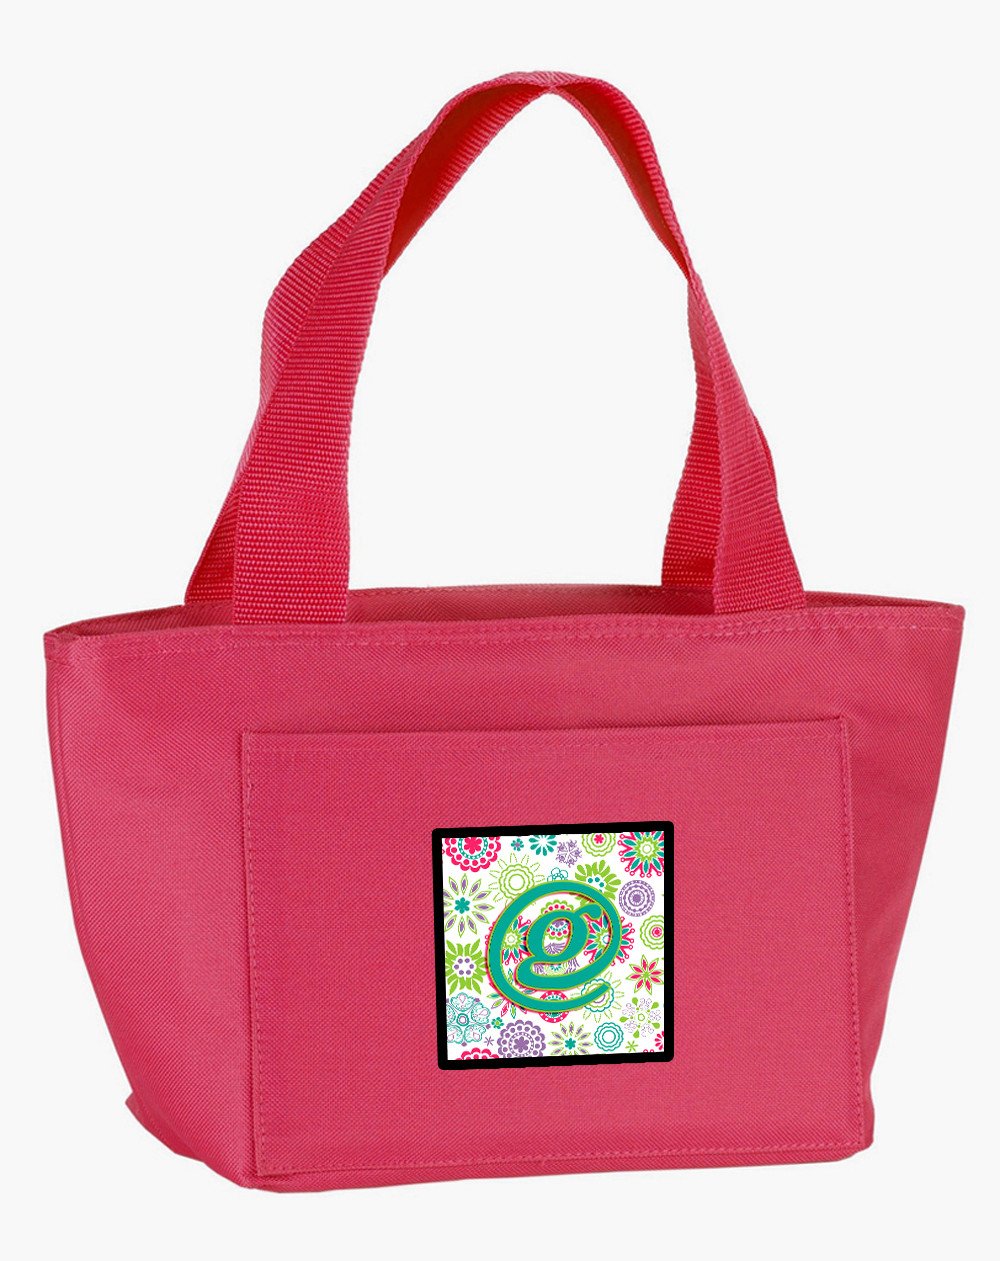 Letter G Flowers Pink Teal Green Initial Lunch Bag CJ2011-GPK-8808 by Caroline's Treasures